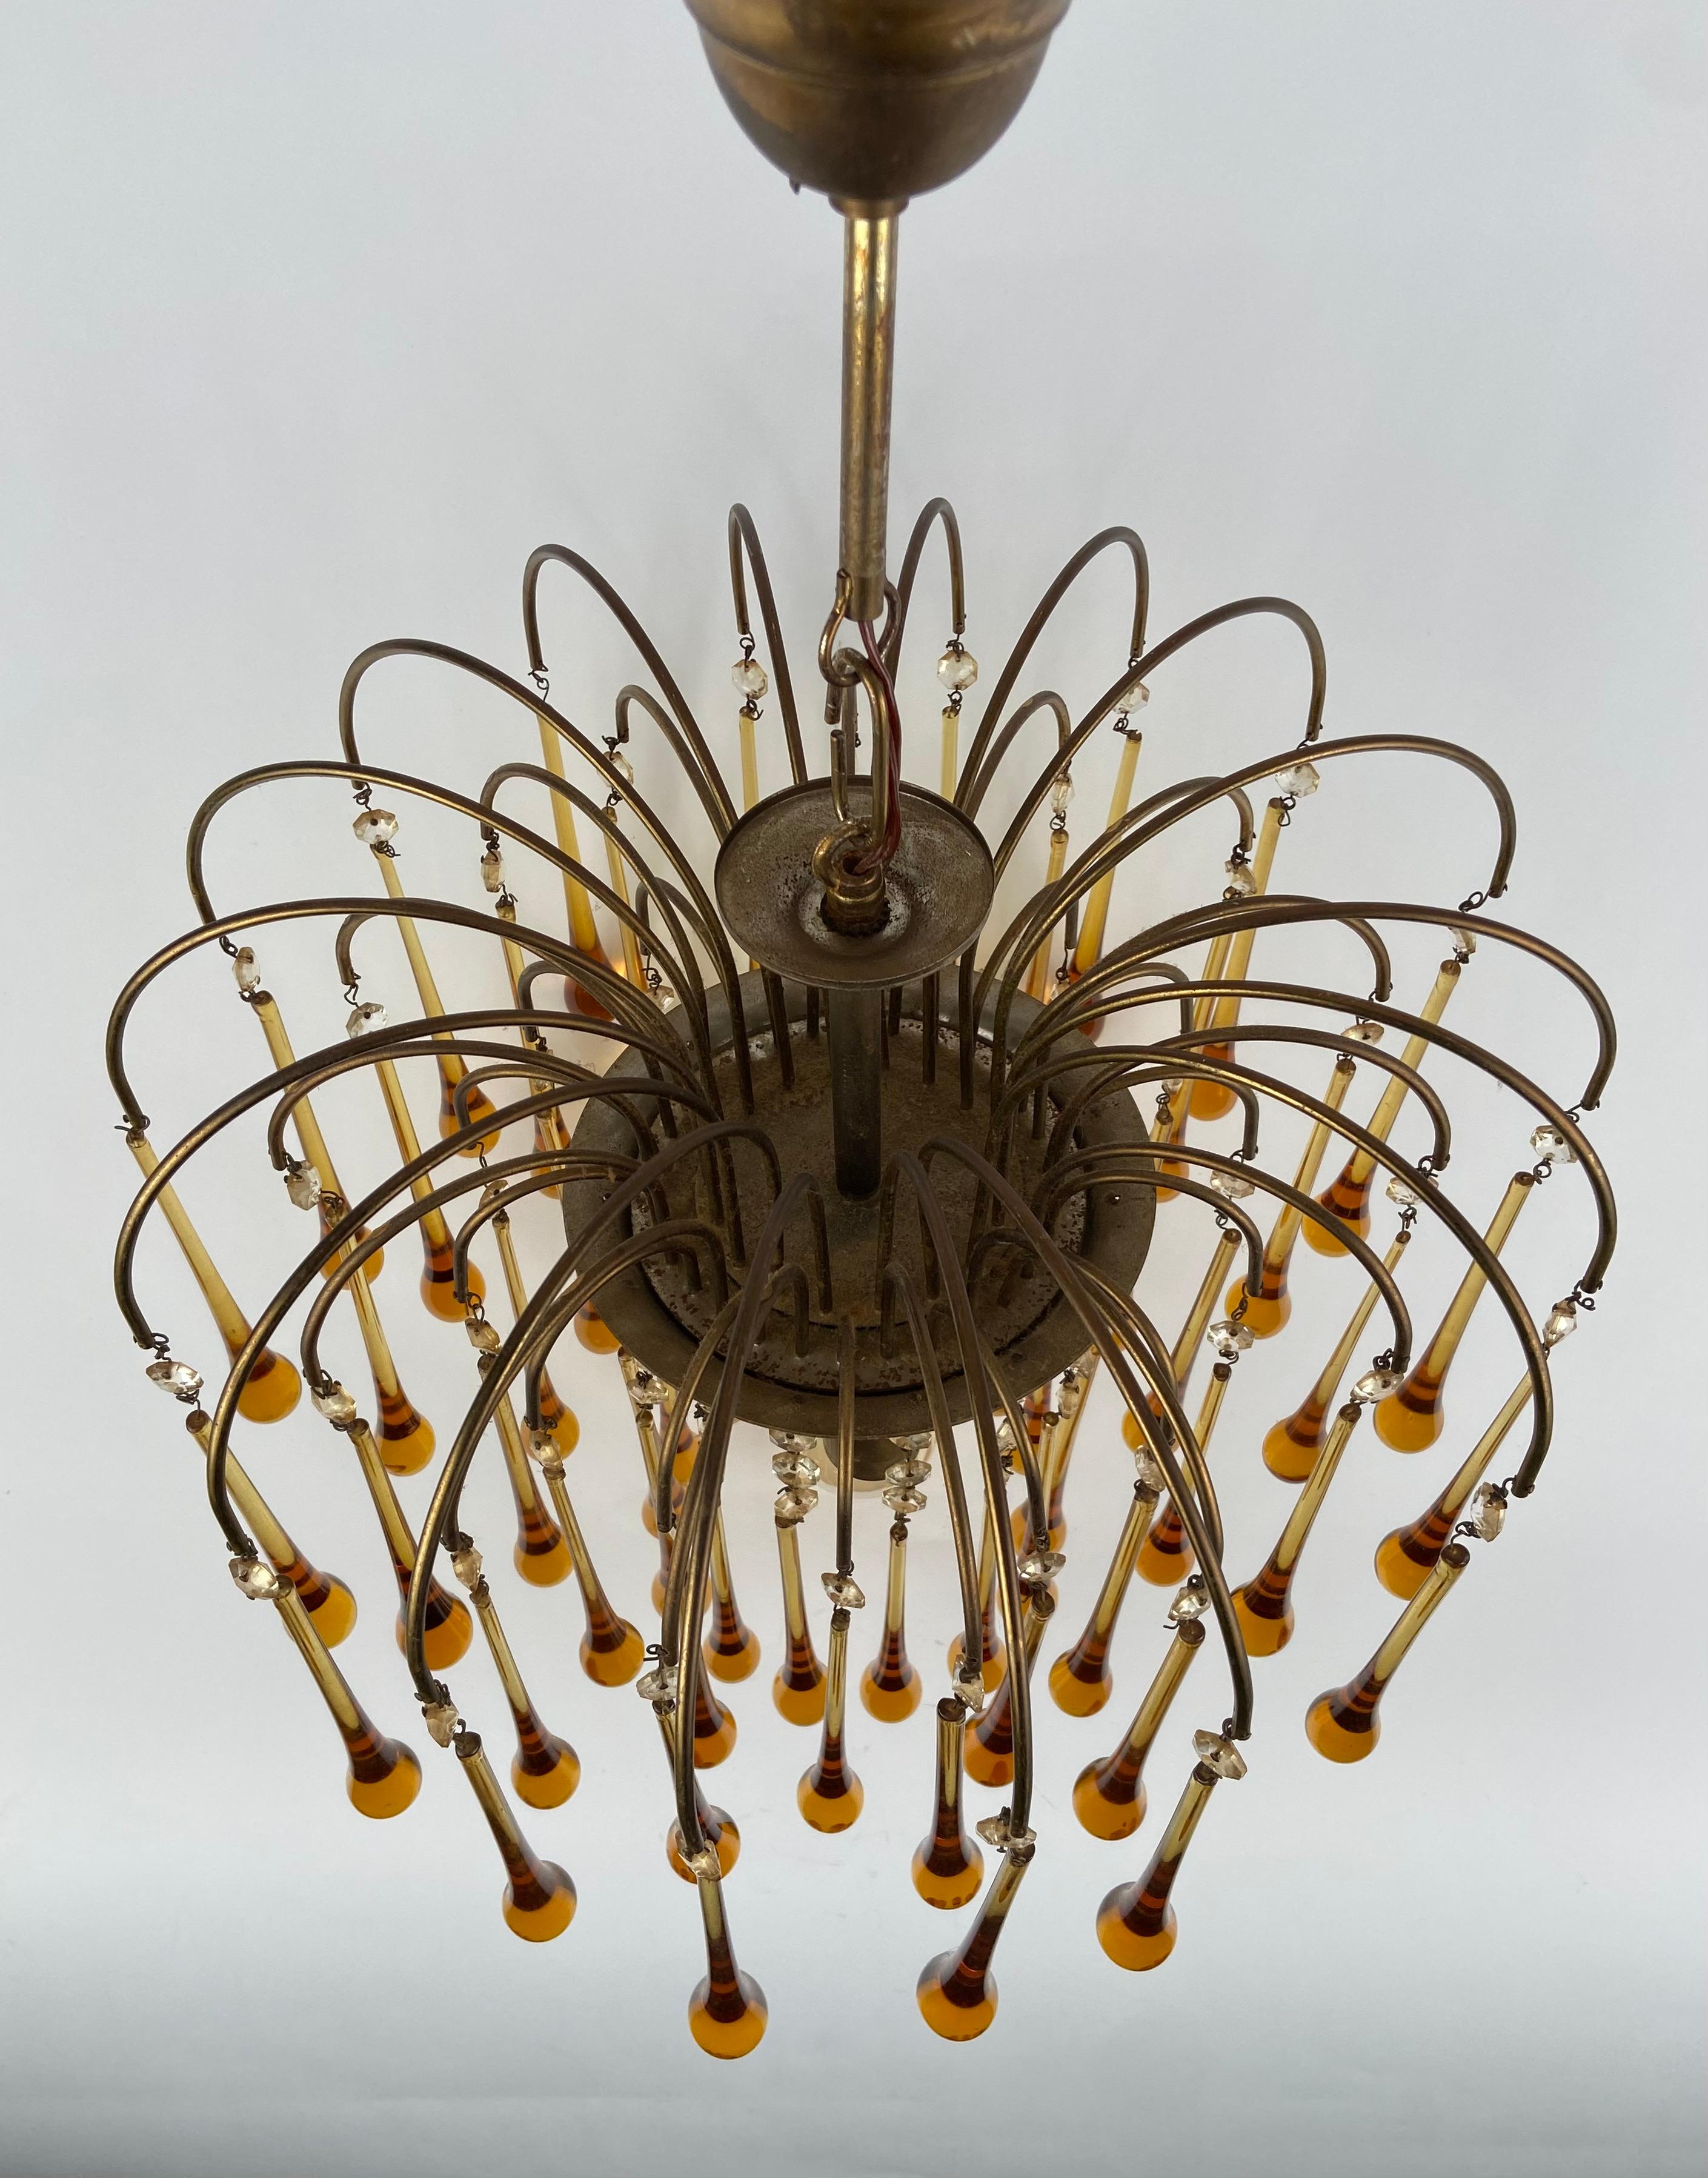 Hand-Crafted Teardrop lamp in cognac